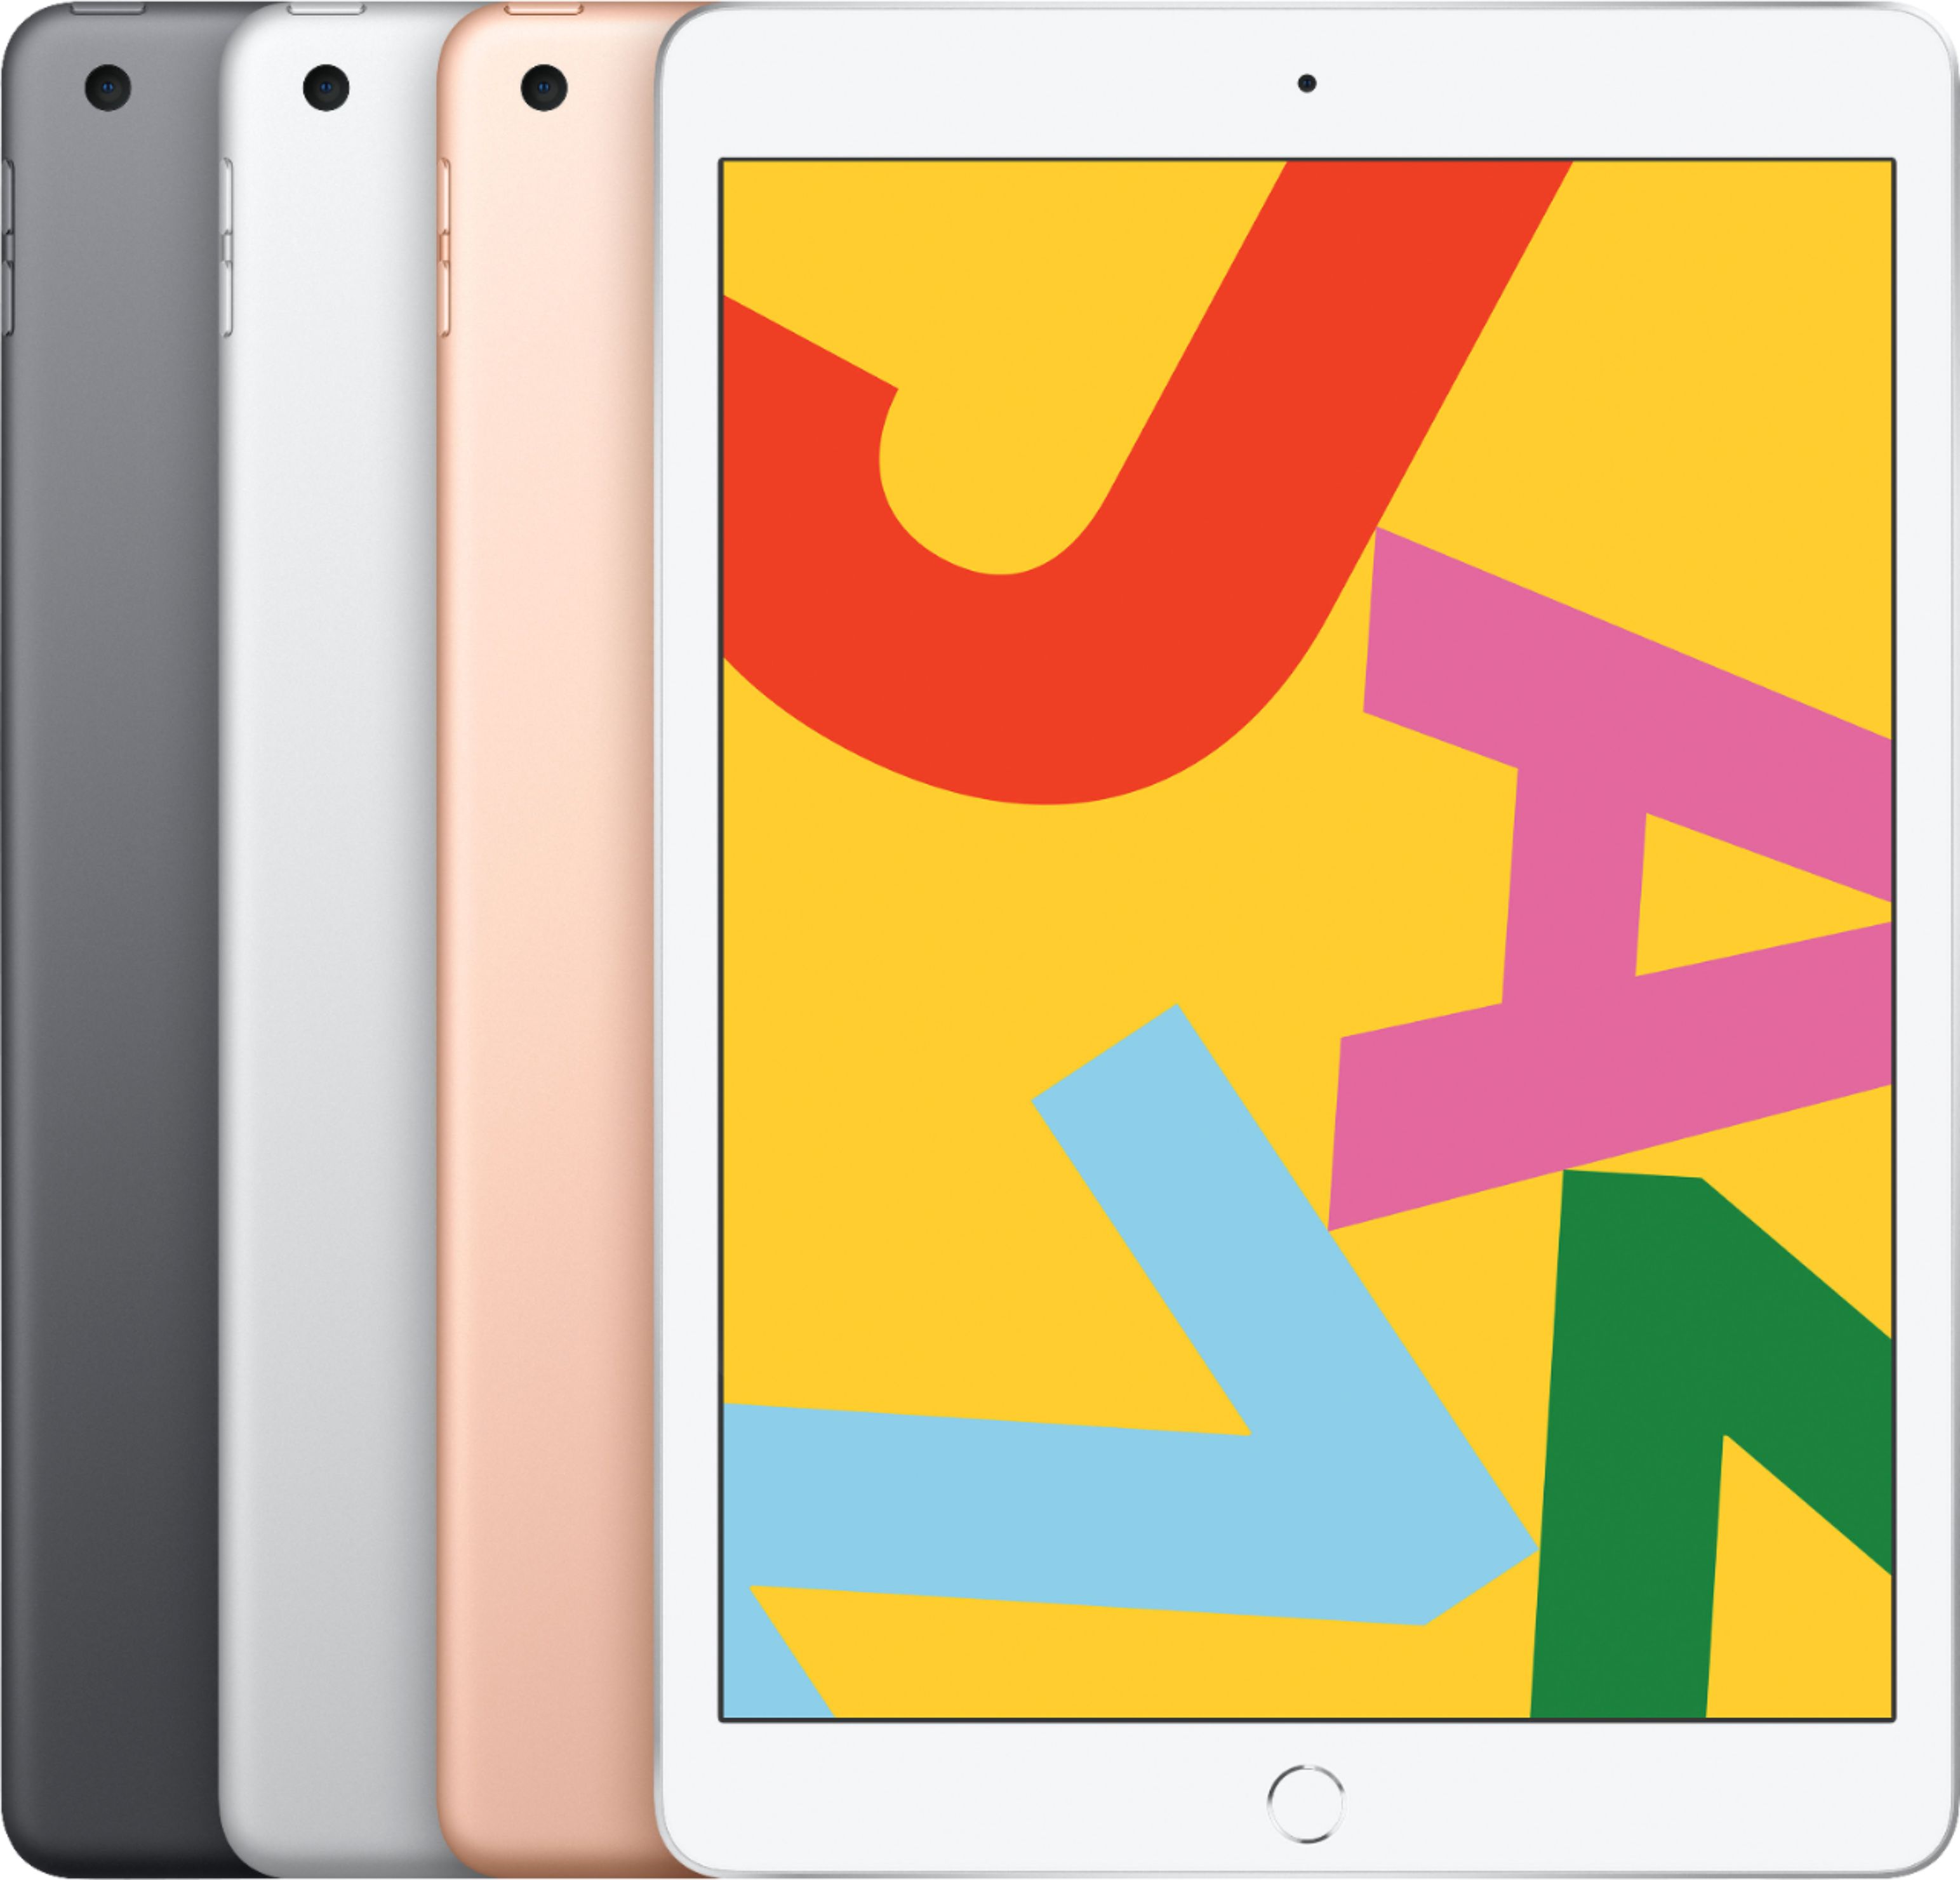 Apple iPad 2018 32GB, Gold (Renewed)